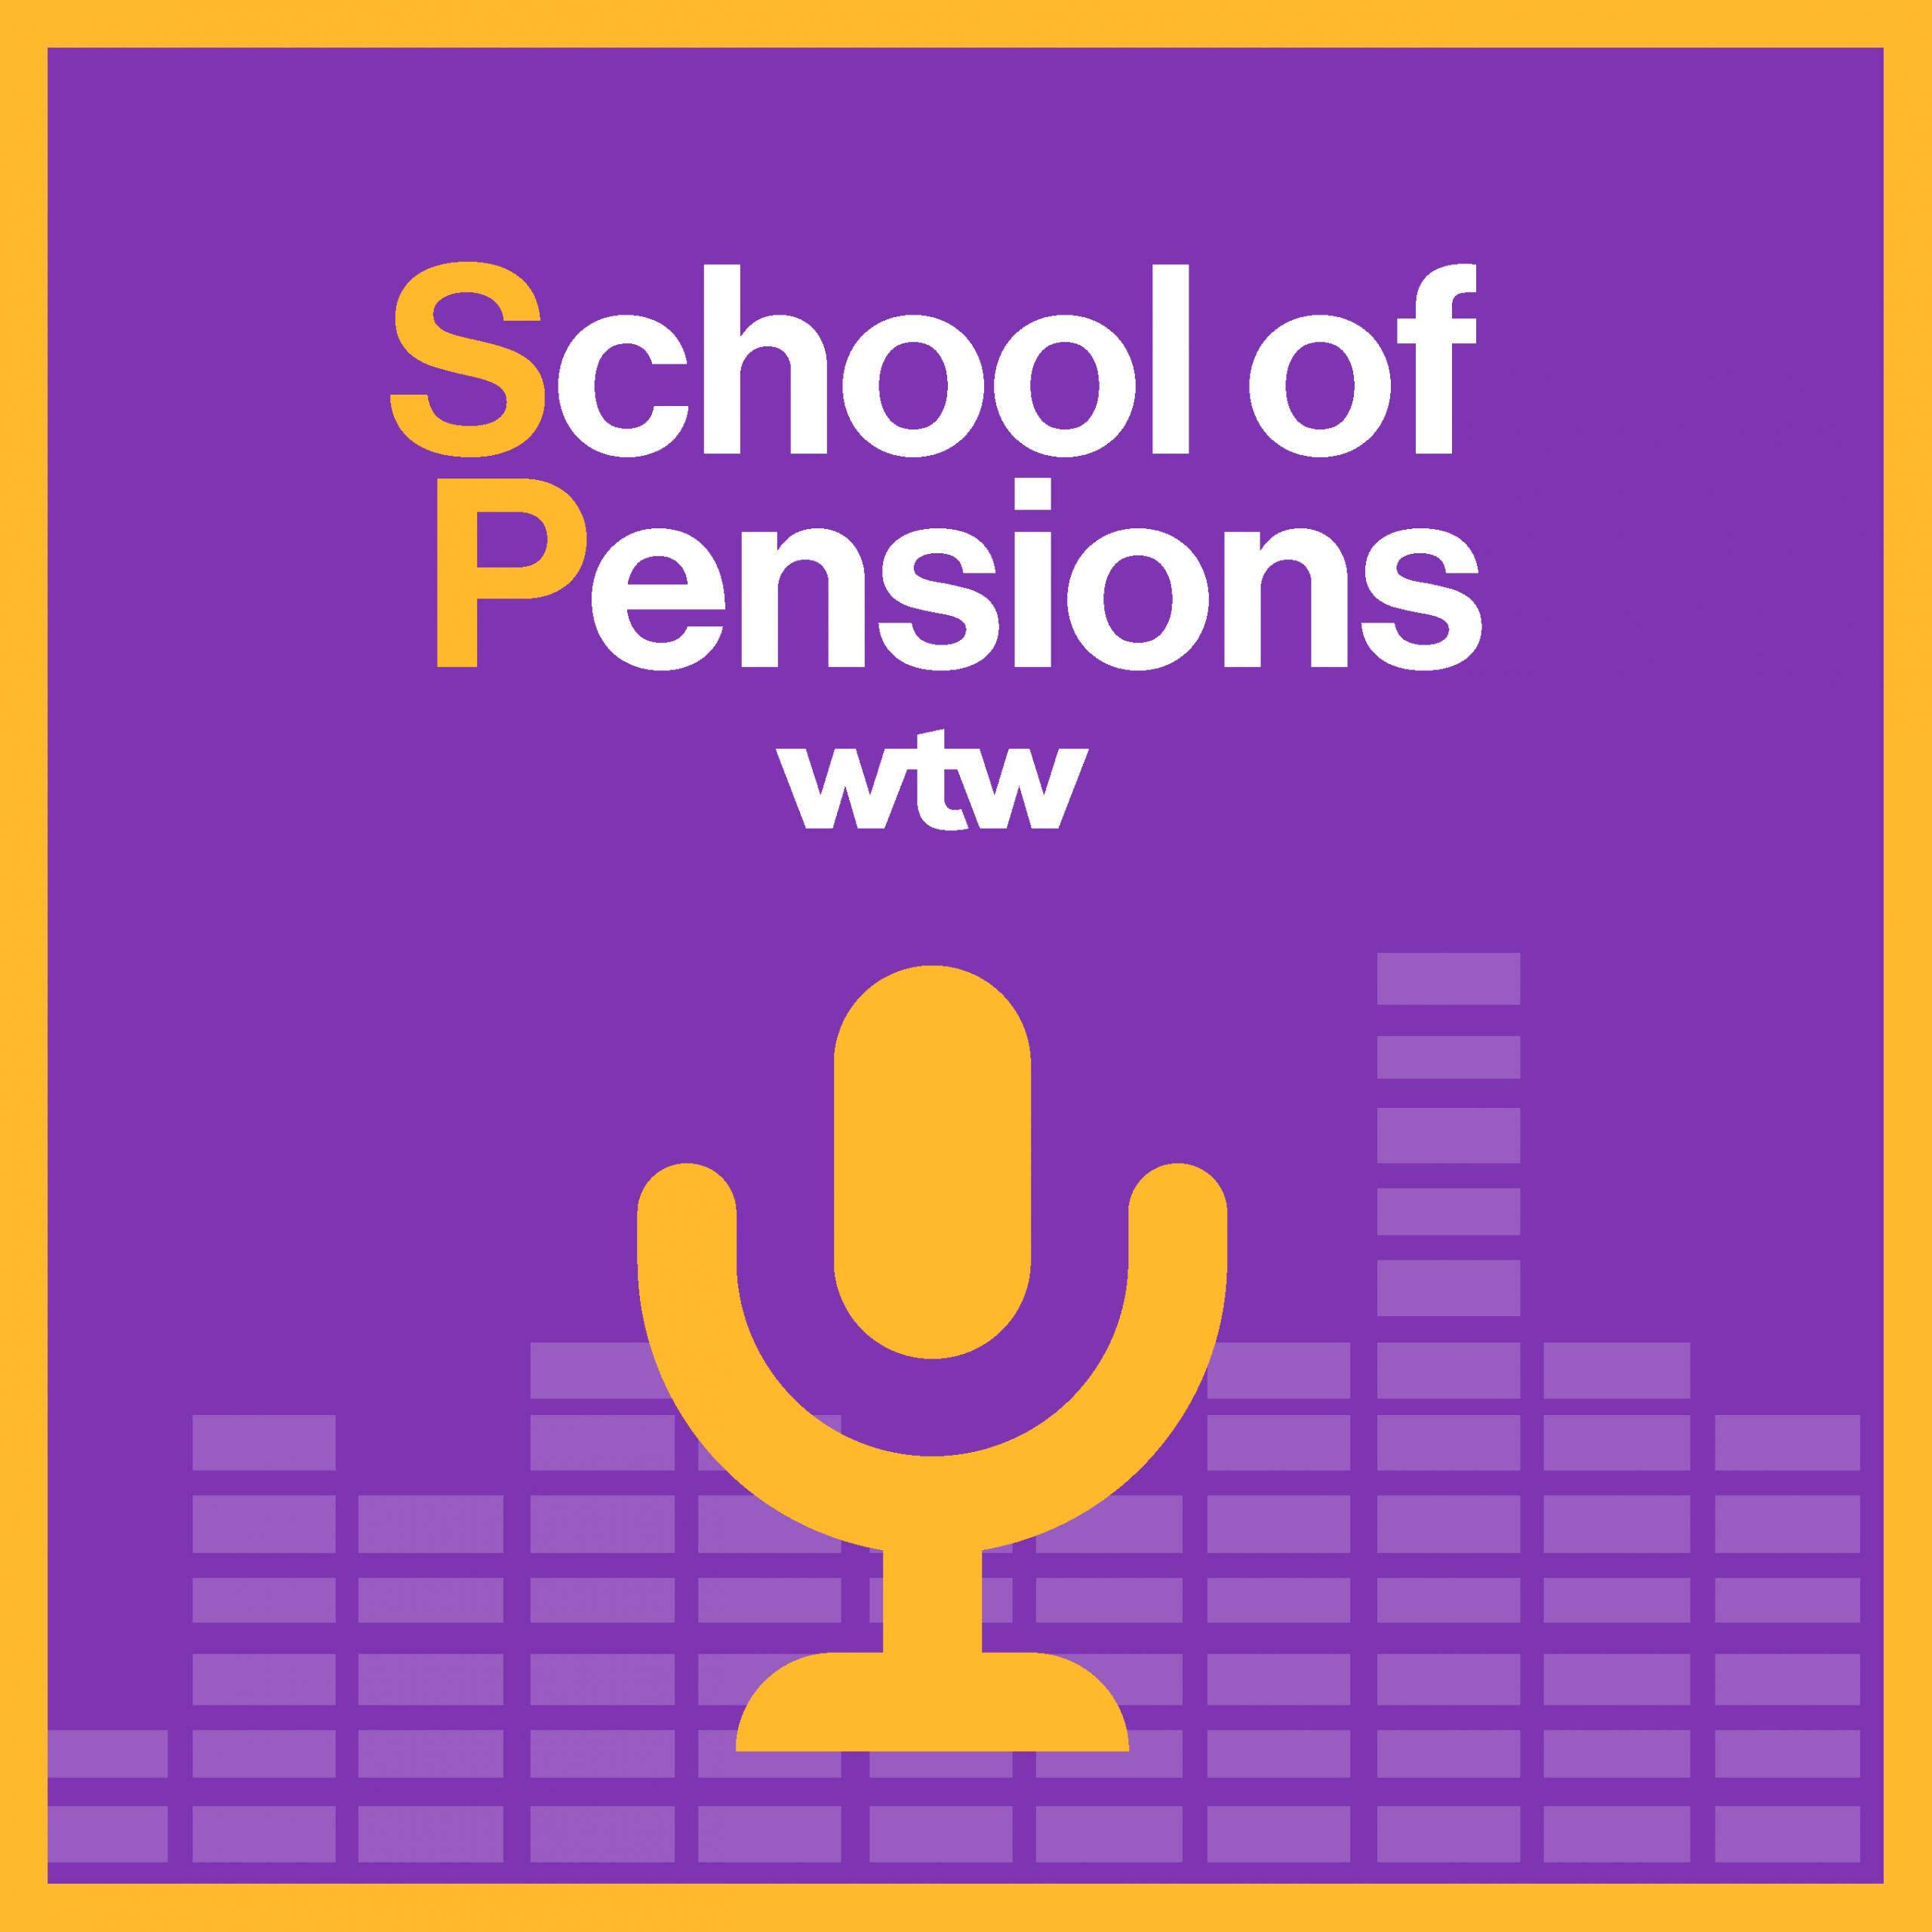 School of pension logo